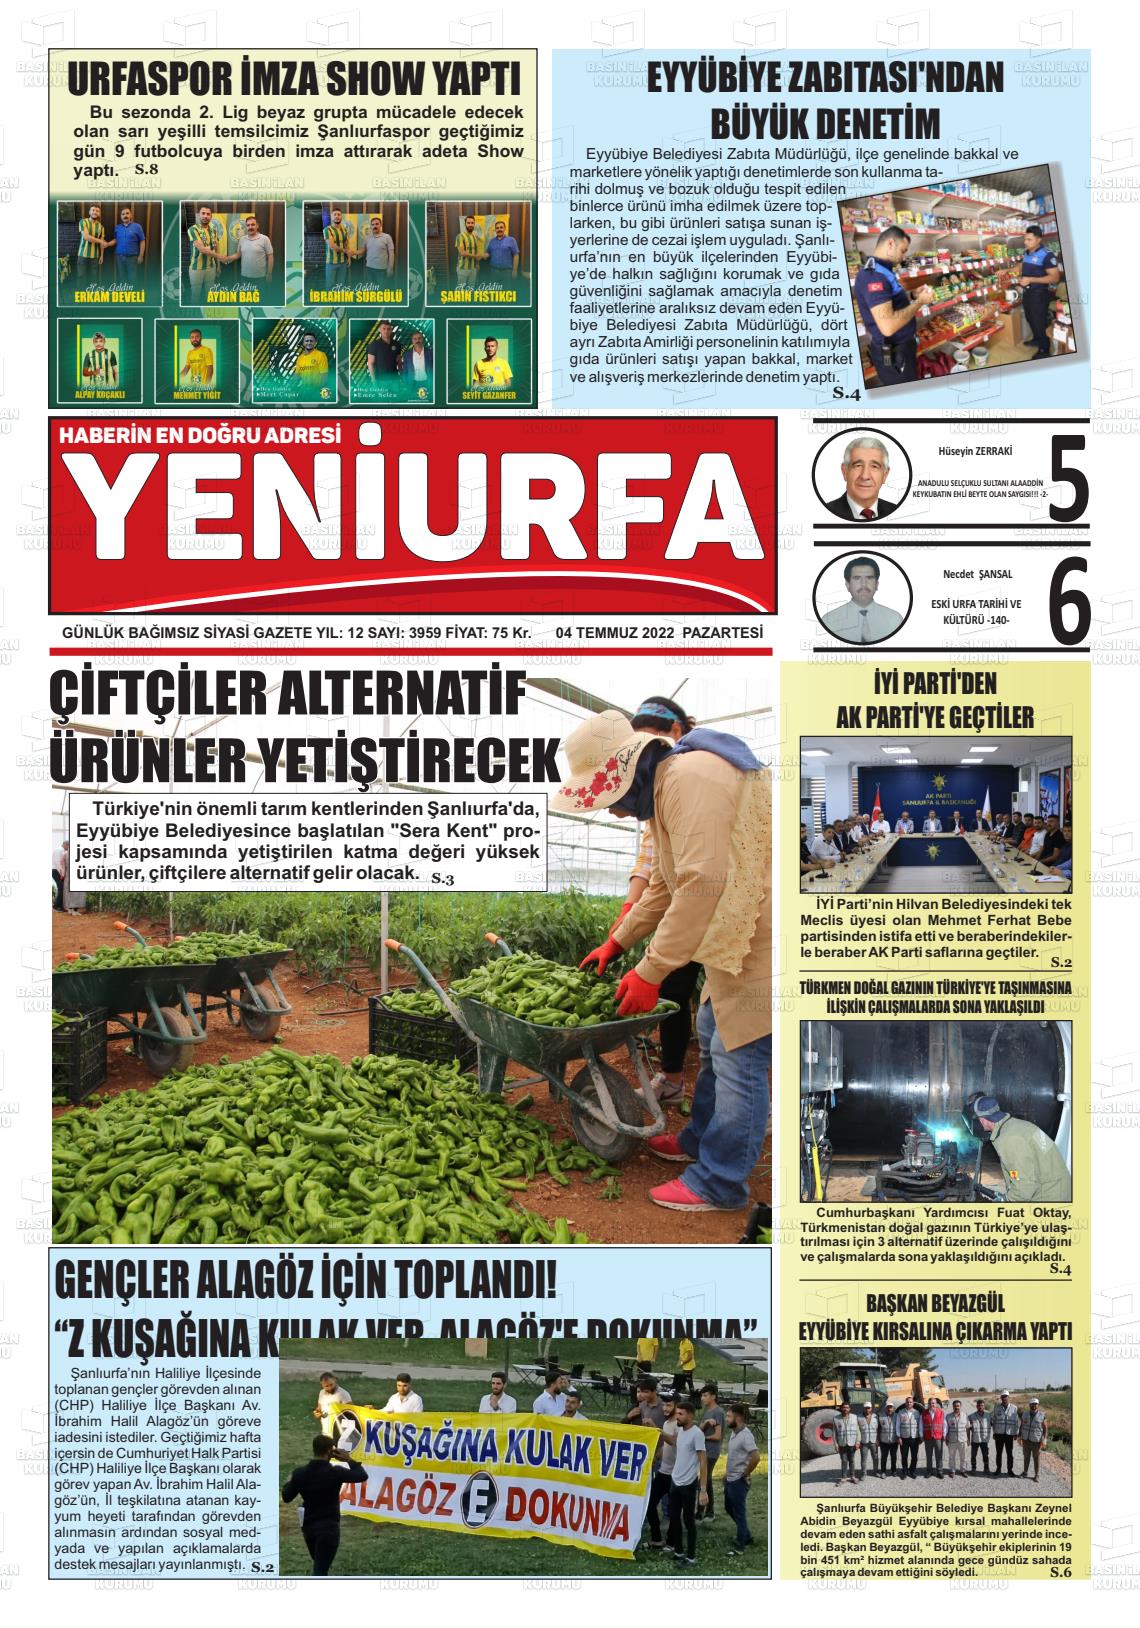 04 Temmuz 2022 Yeni Urfa Gazete Manşeti